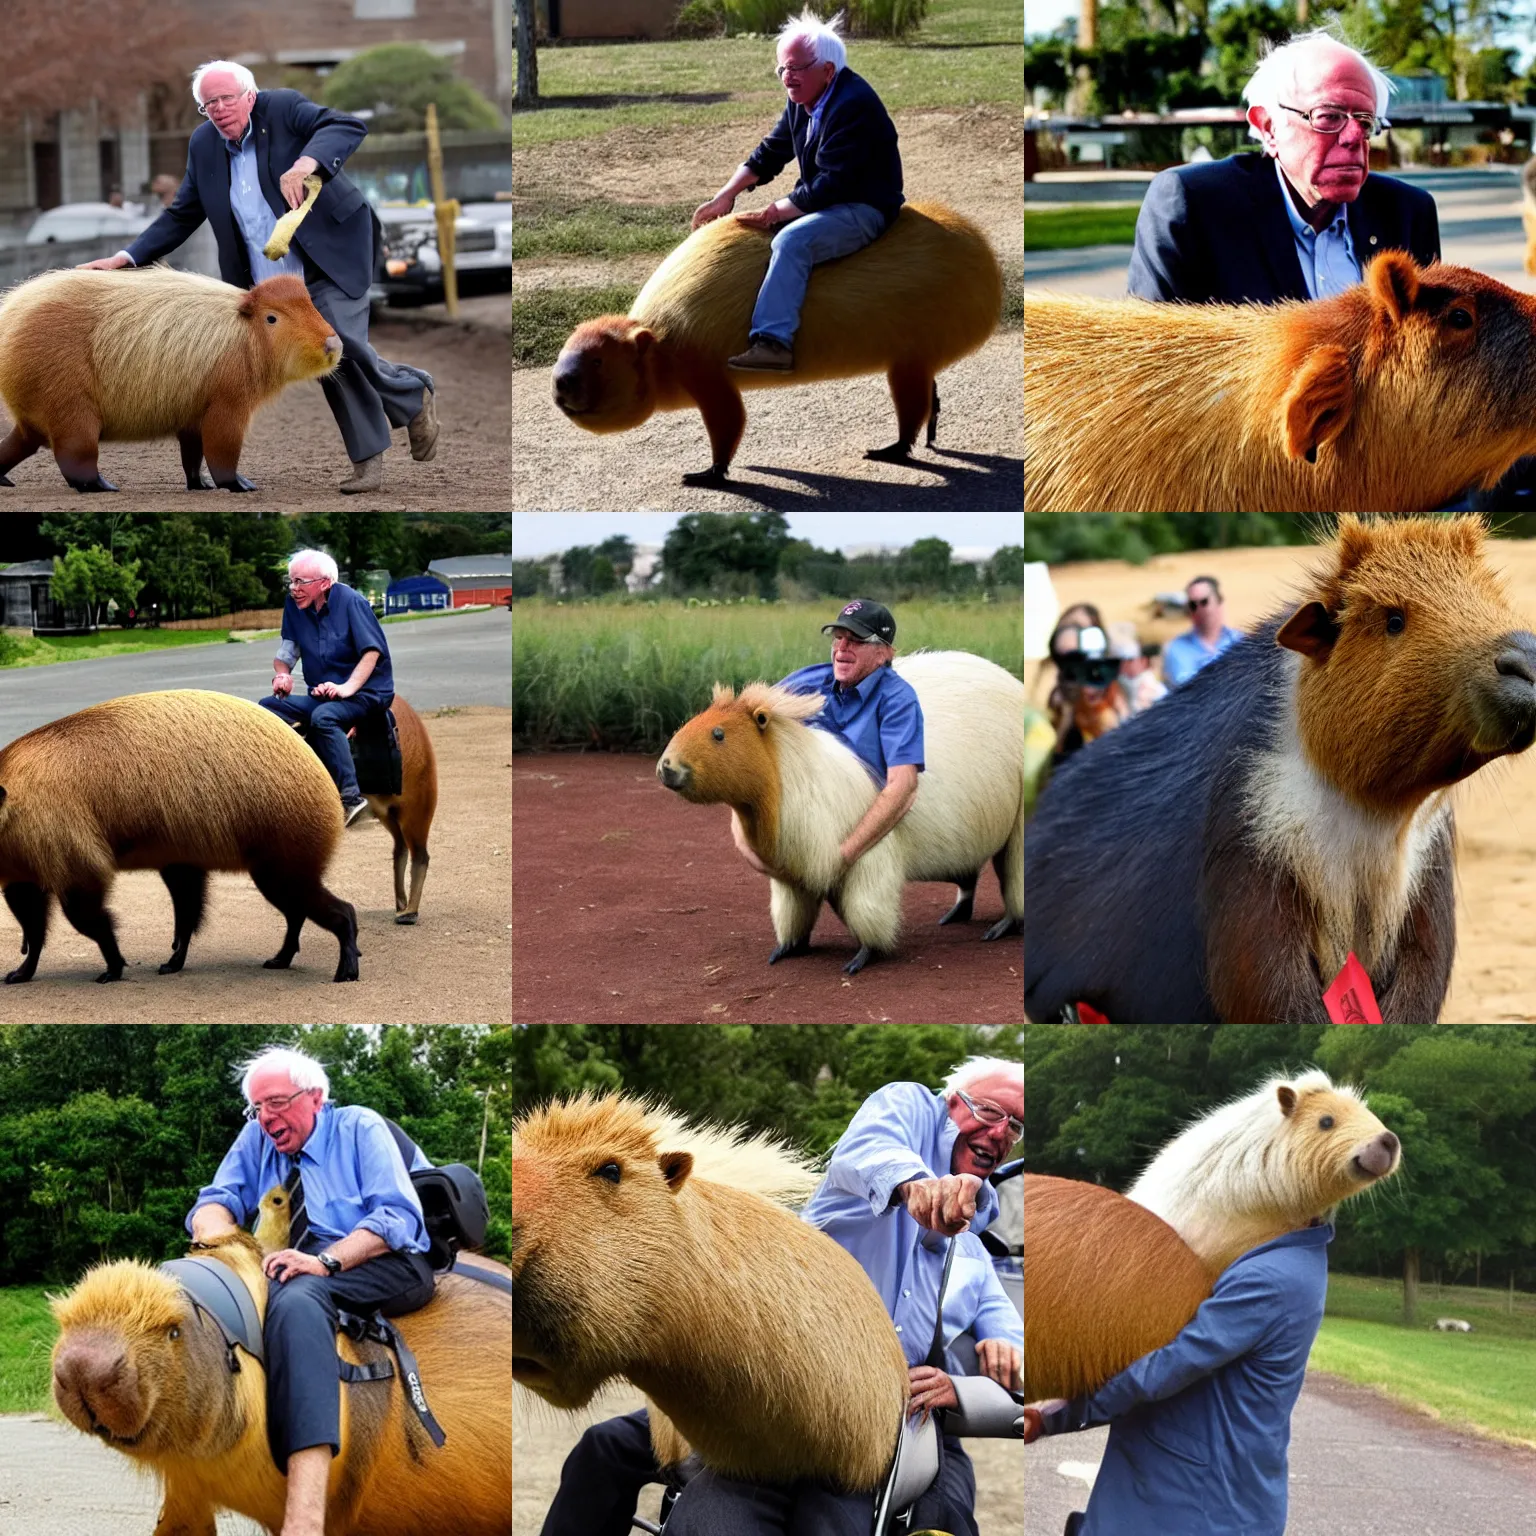 Prompt: Bernie Sanders riding a large capybara